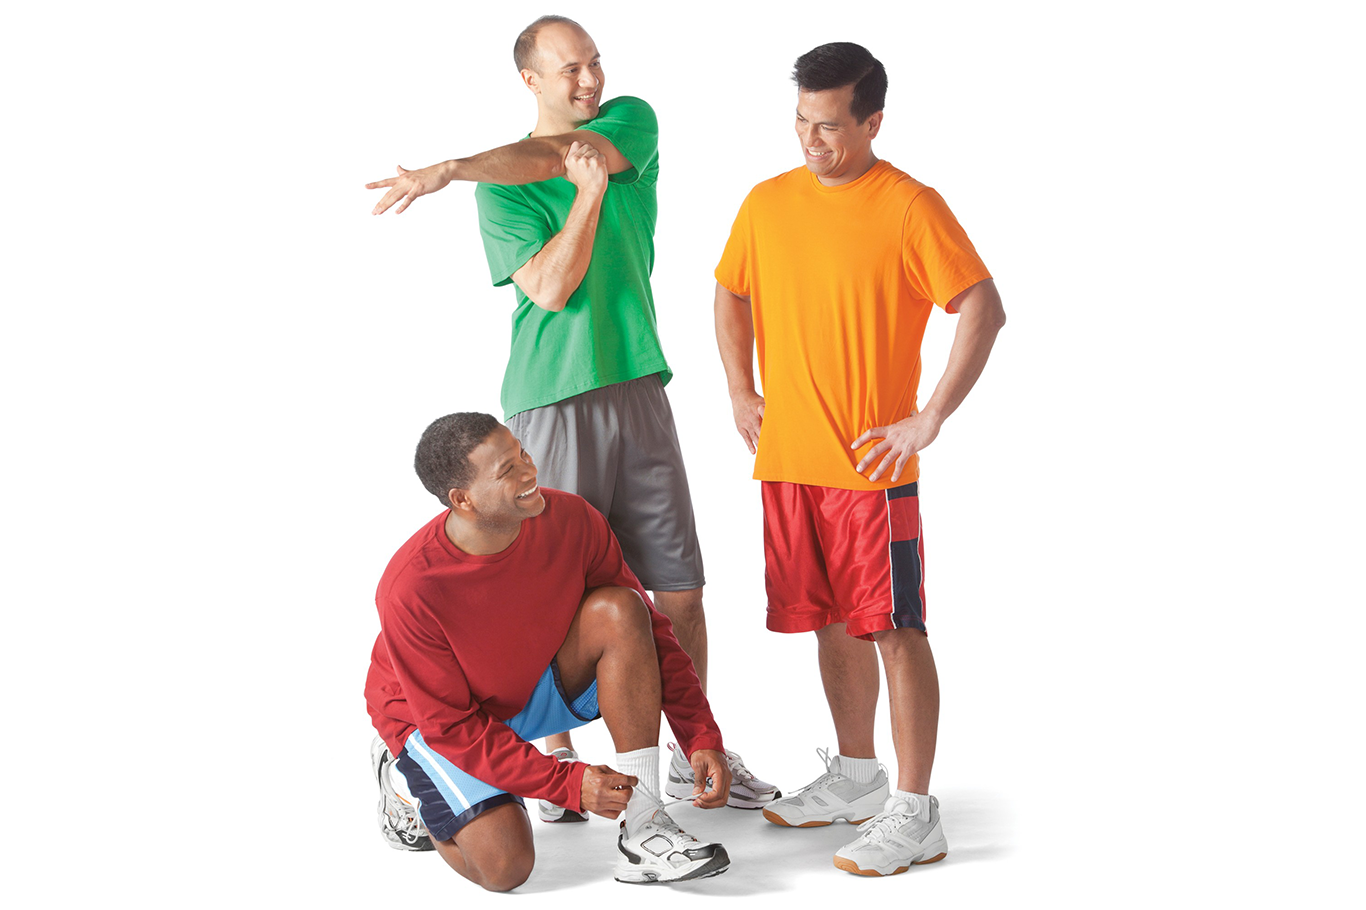 men in athletic gear